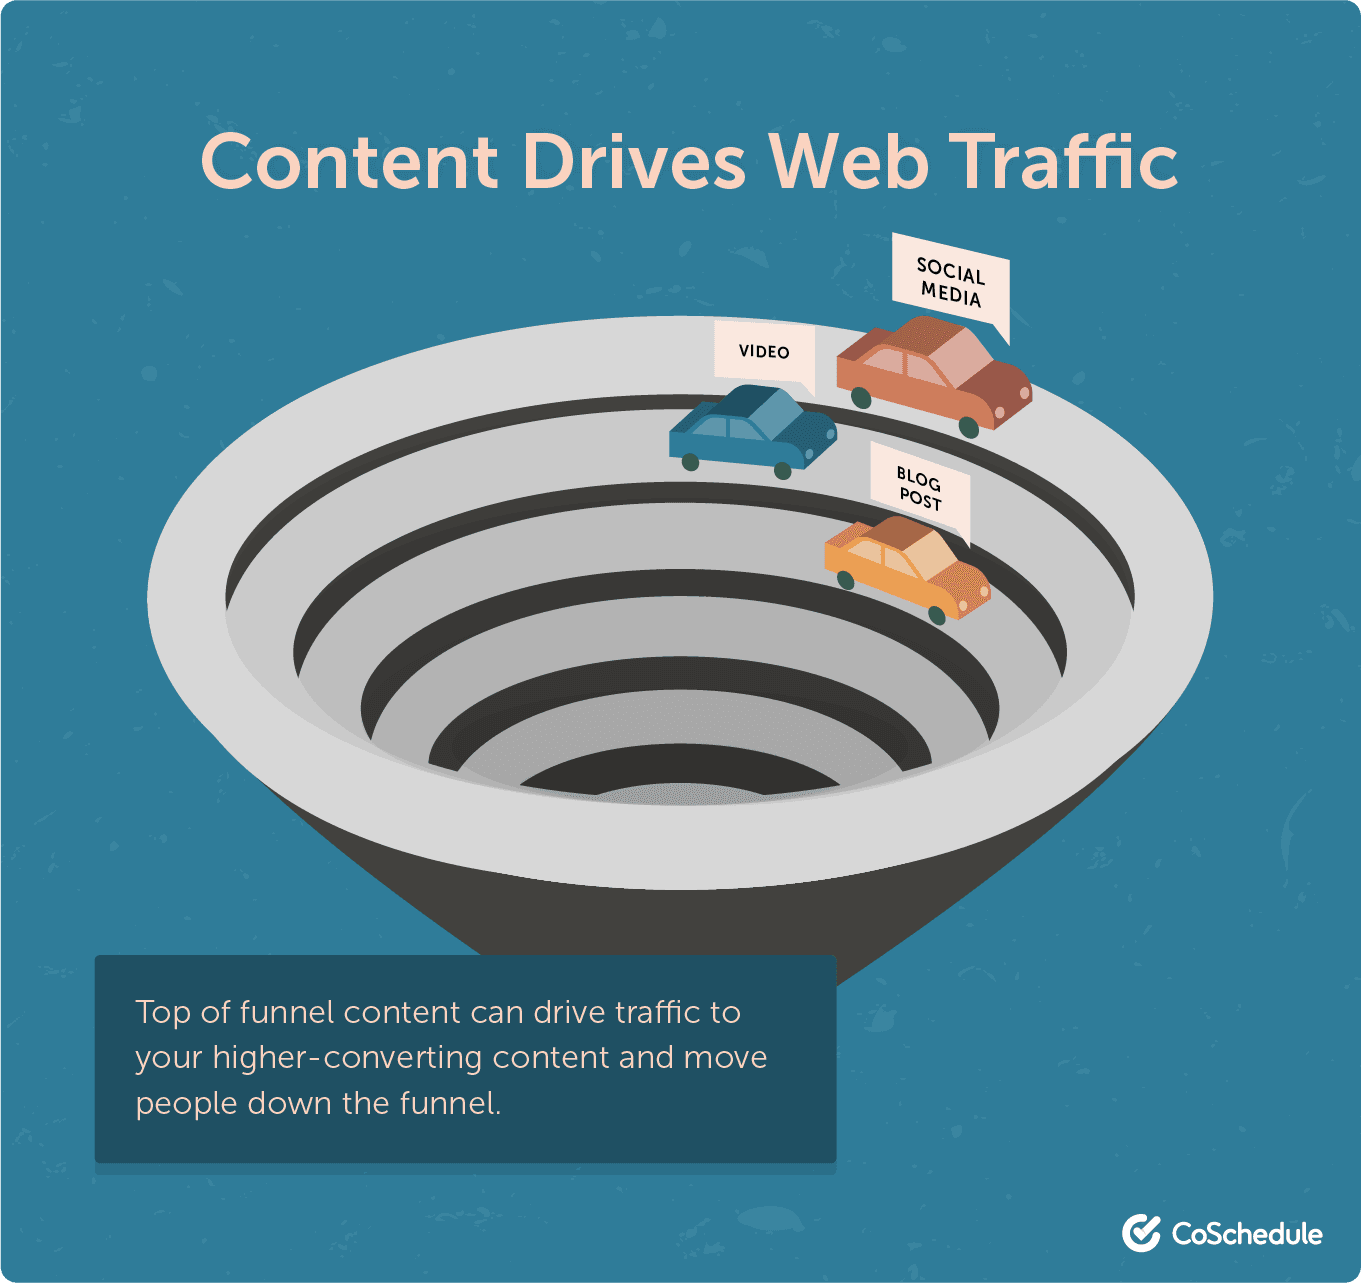 Content drives web traffic